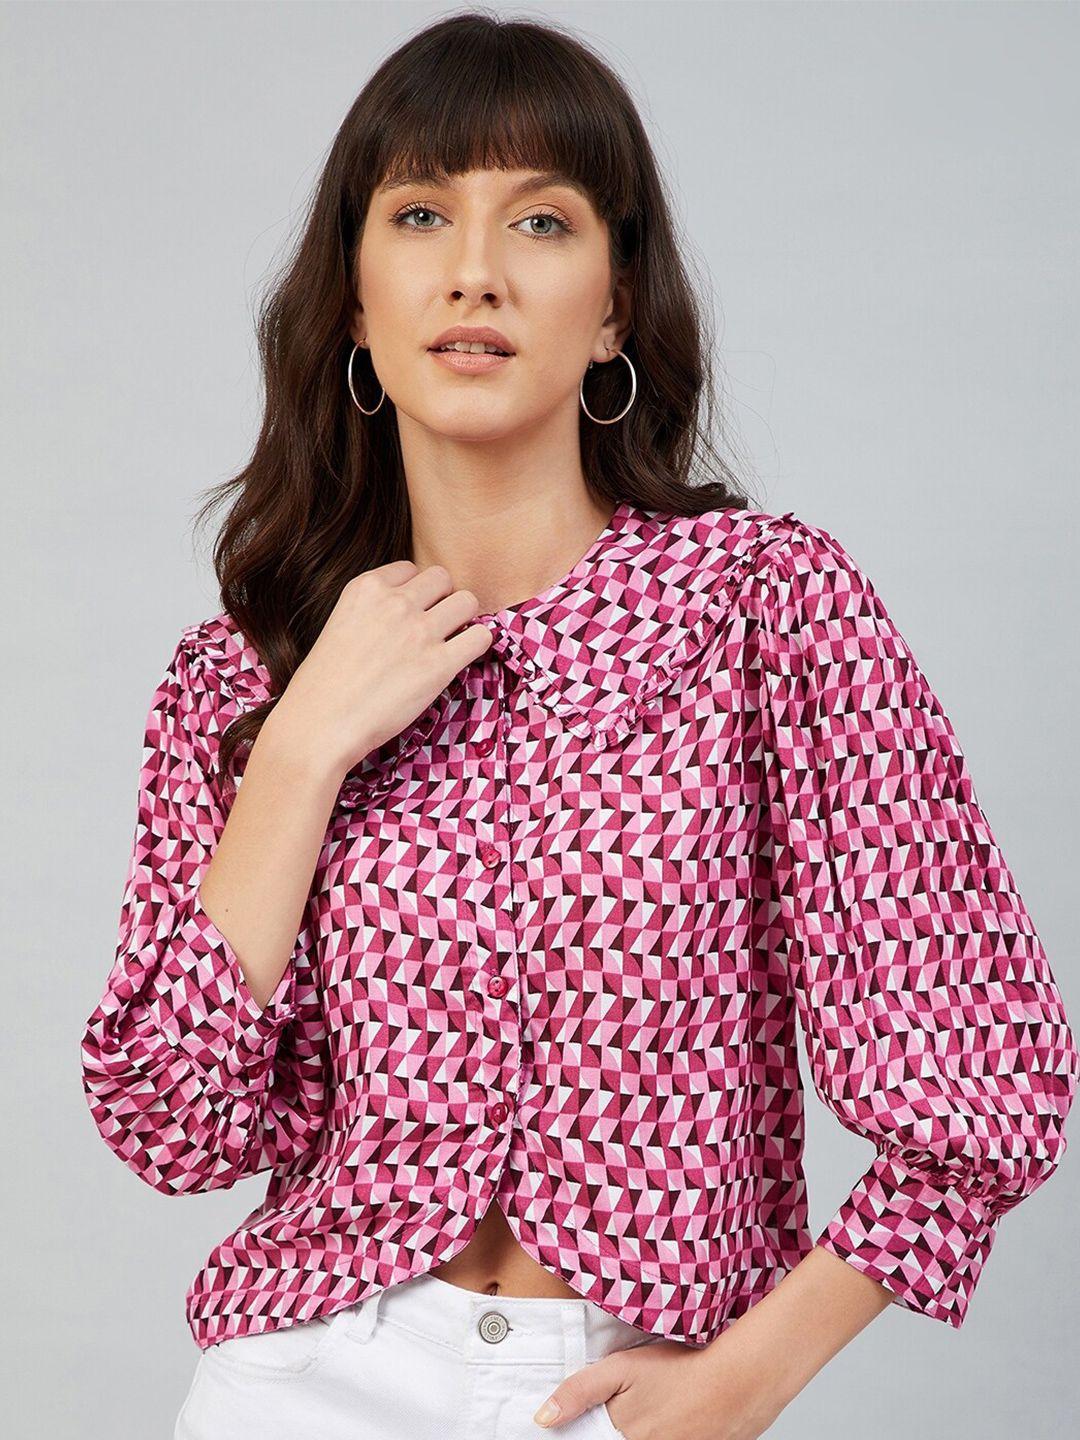 carlton-london-women-multicoloured-geometric-shirt-style-crop-top